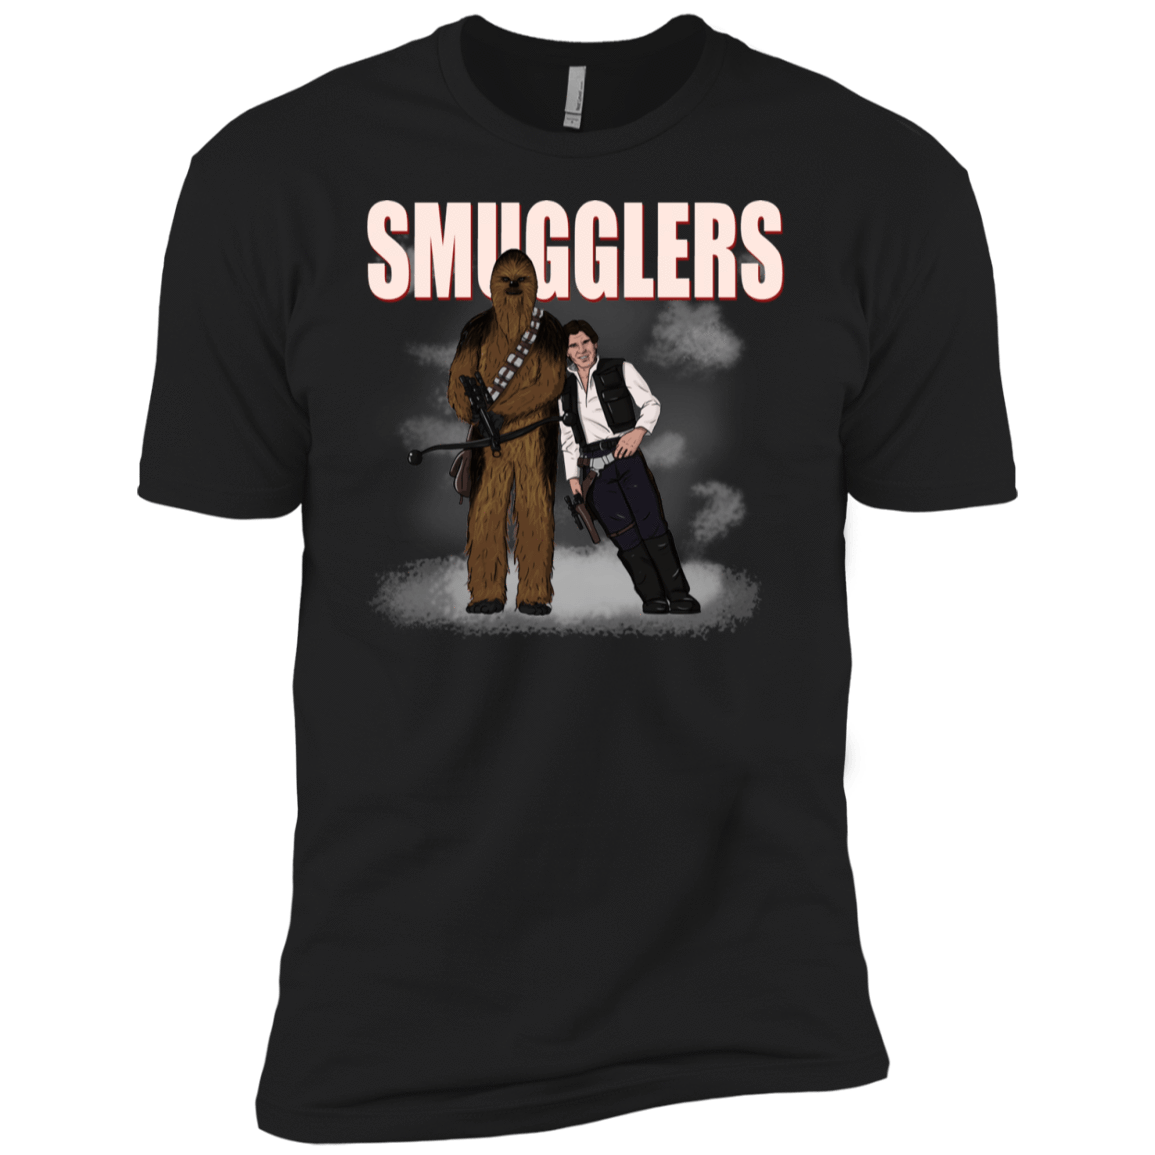 T-Shirts Black / YXS Smugglers Boys Premium T-Shirt